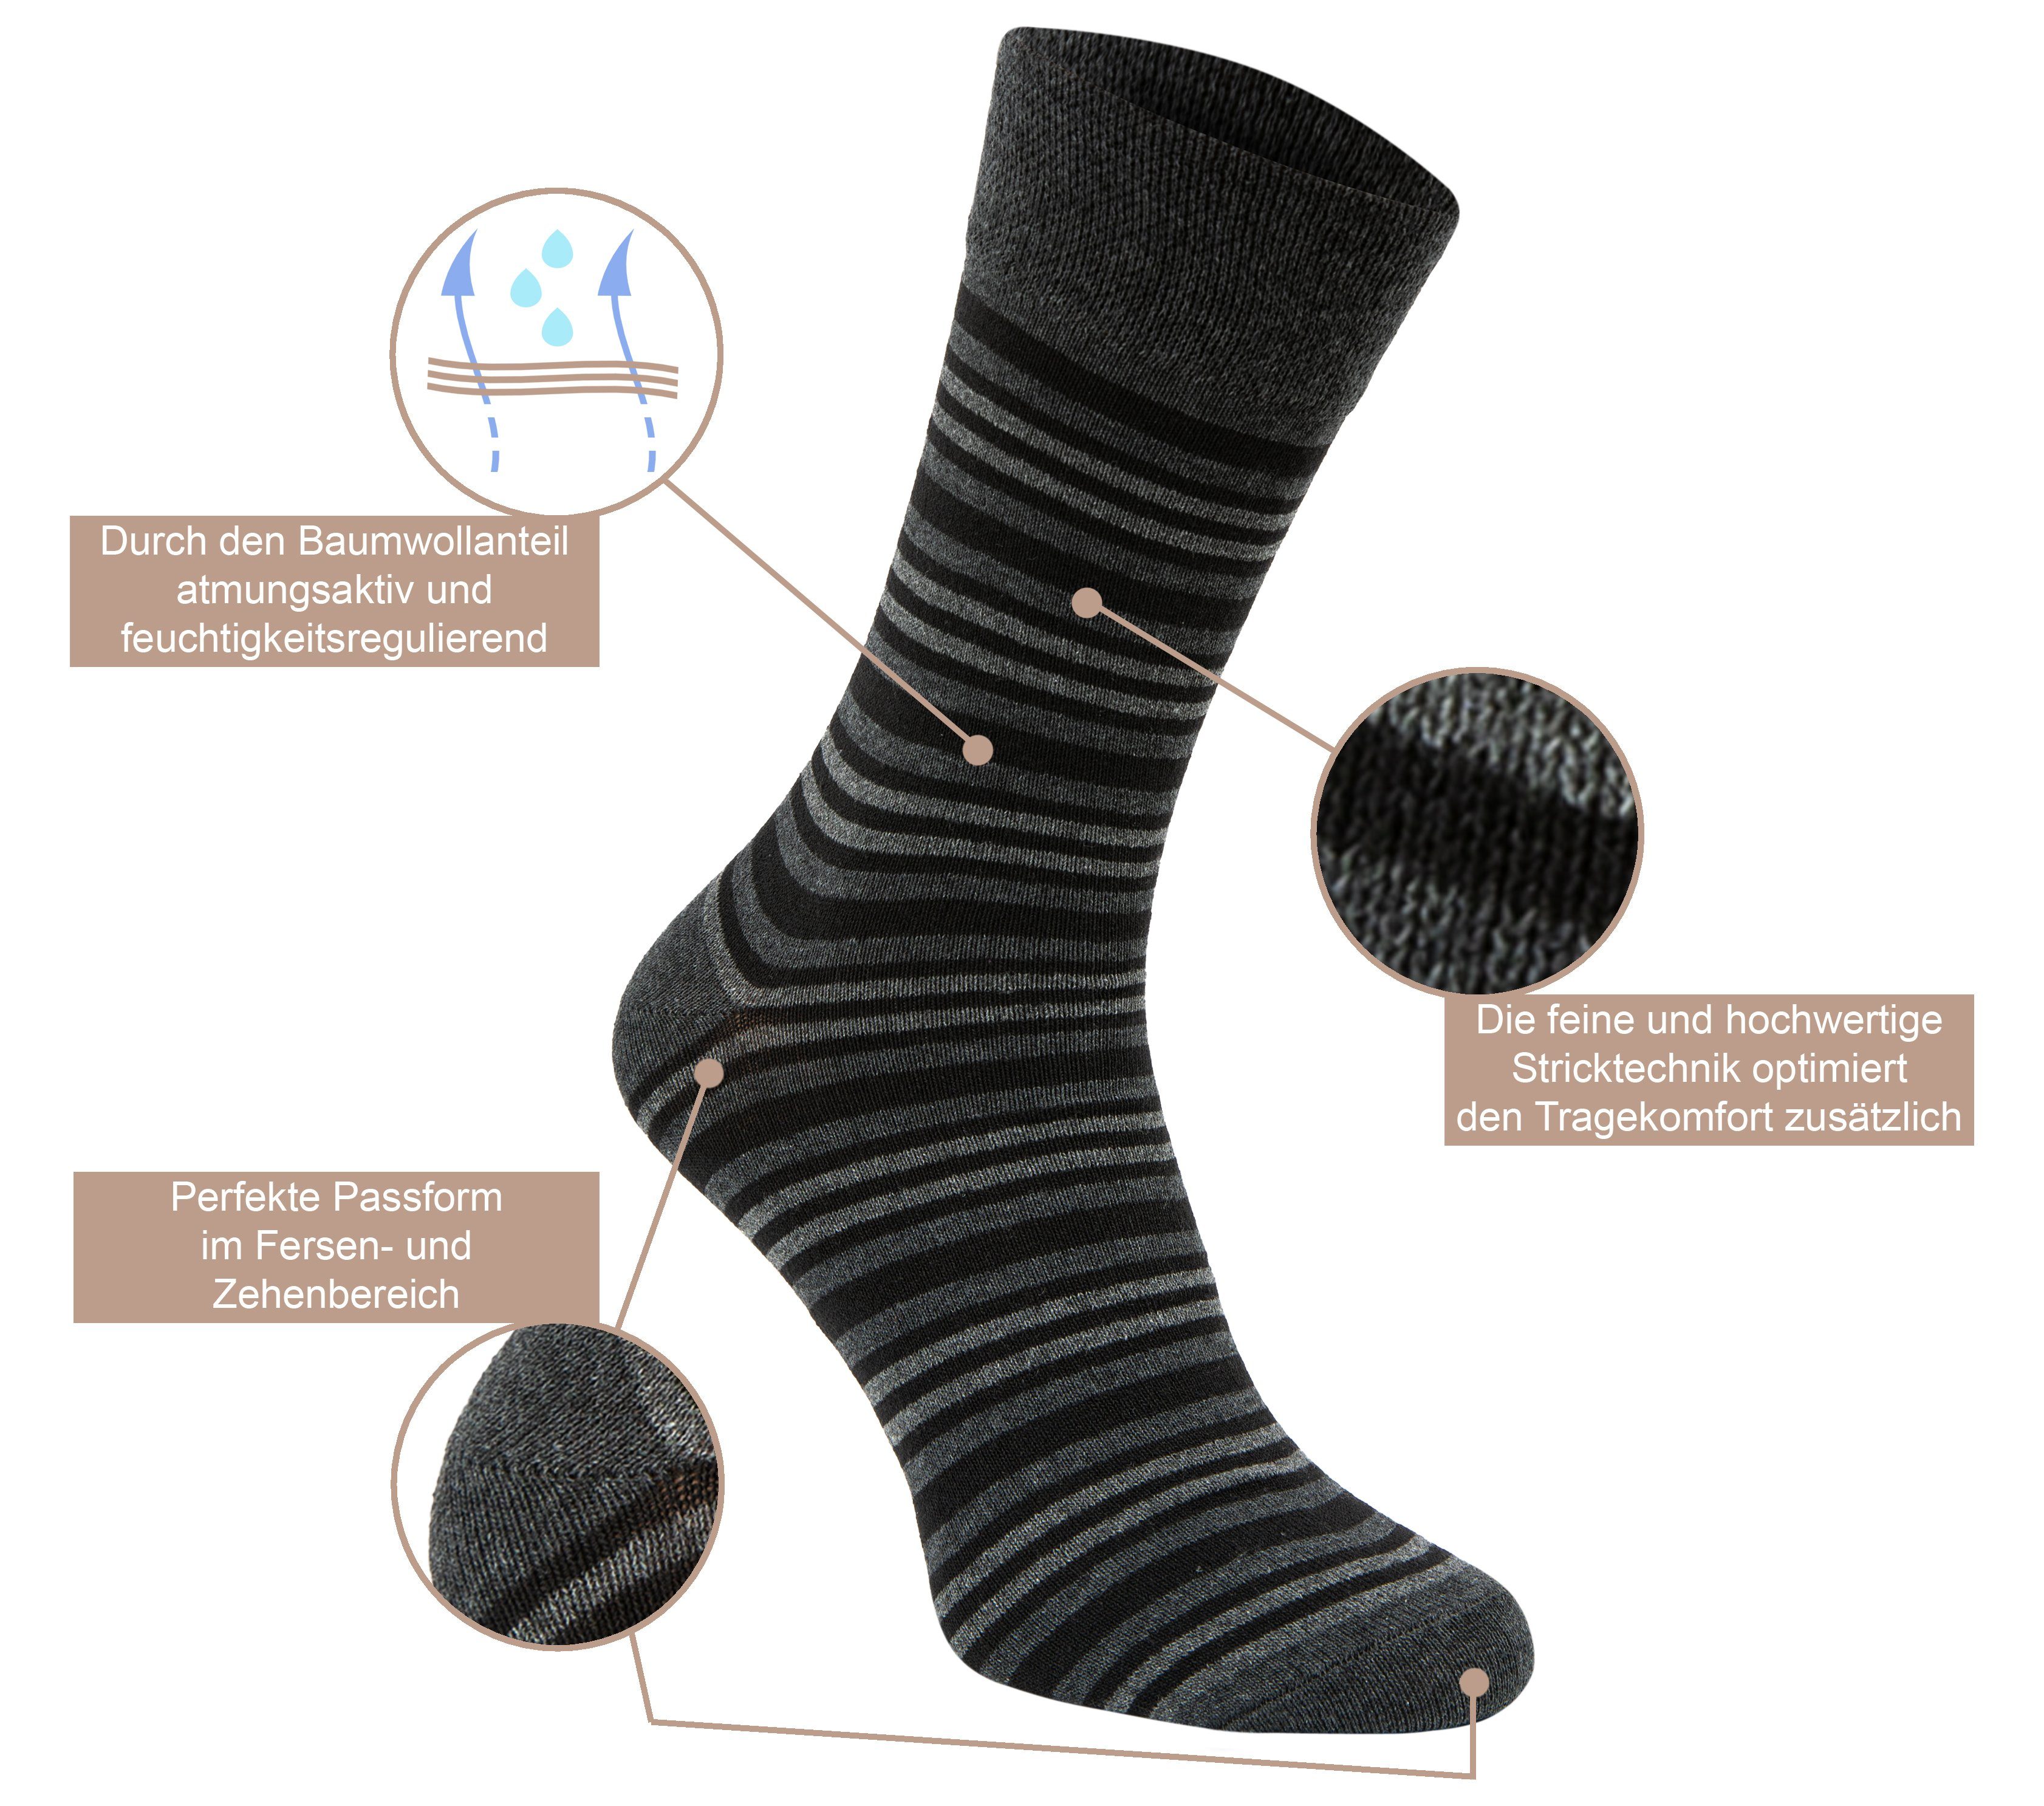 Paolo Renzo Socken Herren Baumwolle Businesssocken Atmungsaktive aus (10-Paar) Business hochwertiger